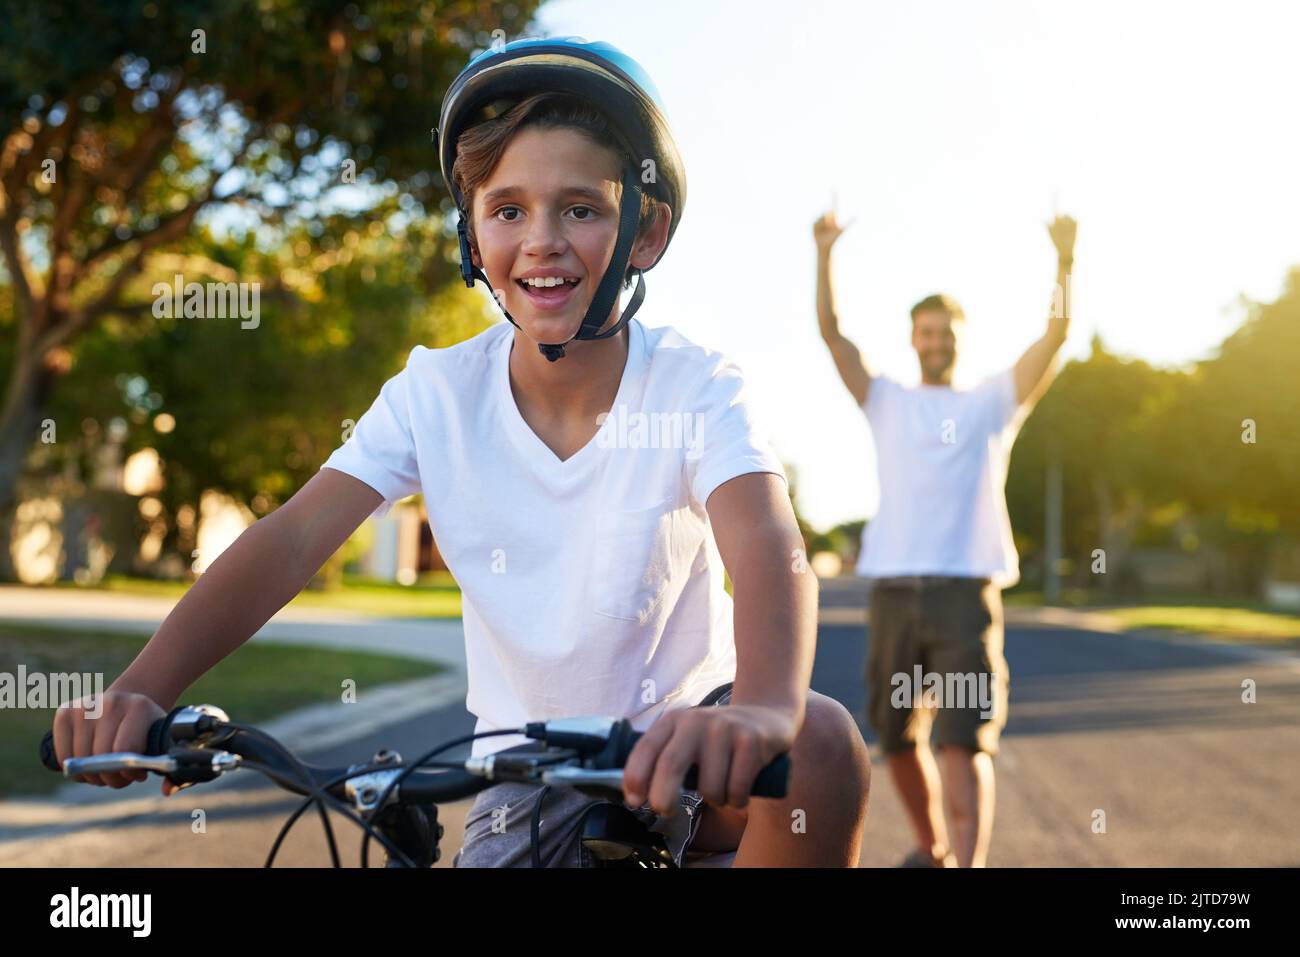 Cycling through his block. a young boy riding his bicycle through his neighbourhood. Stock Photo